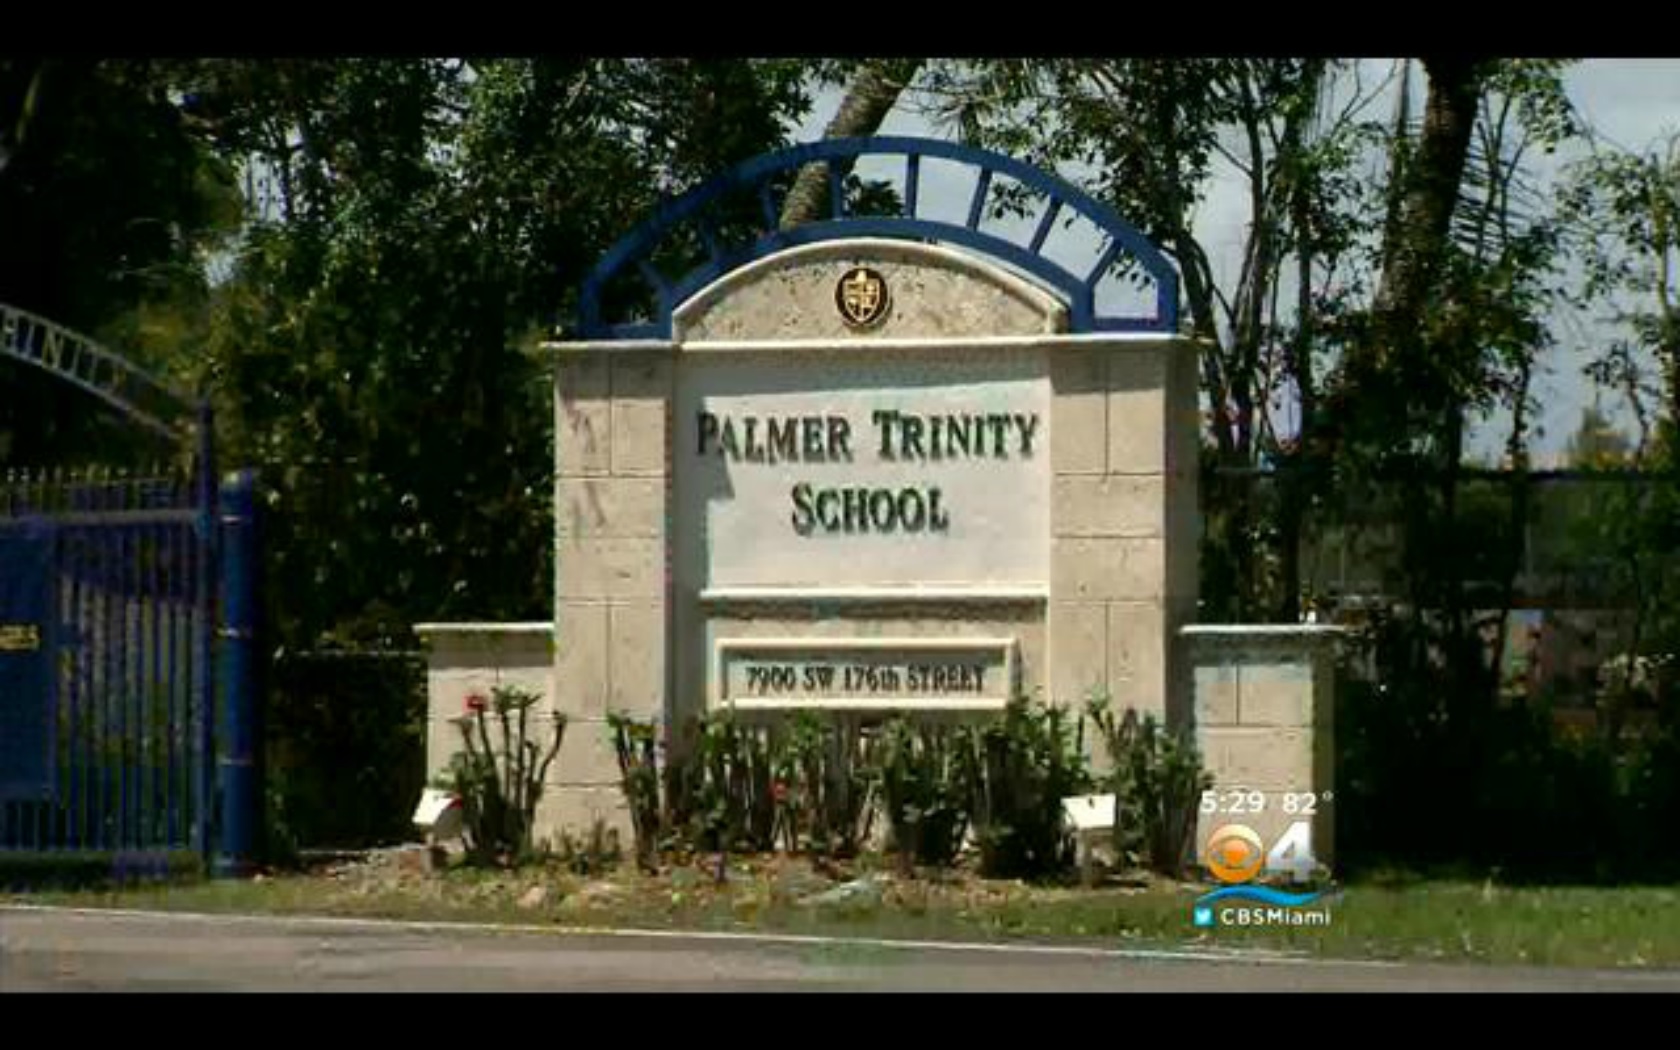 Miami Florida private school Palmer Trinity sued for bullying